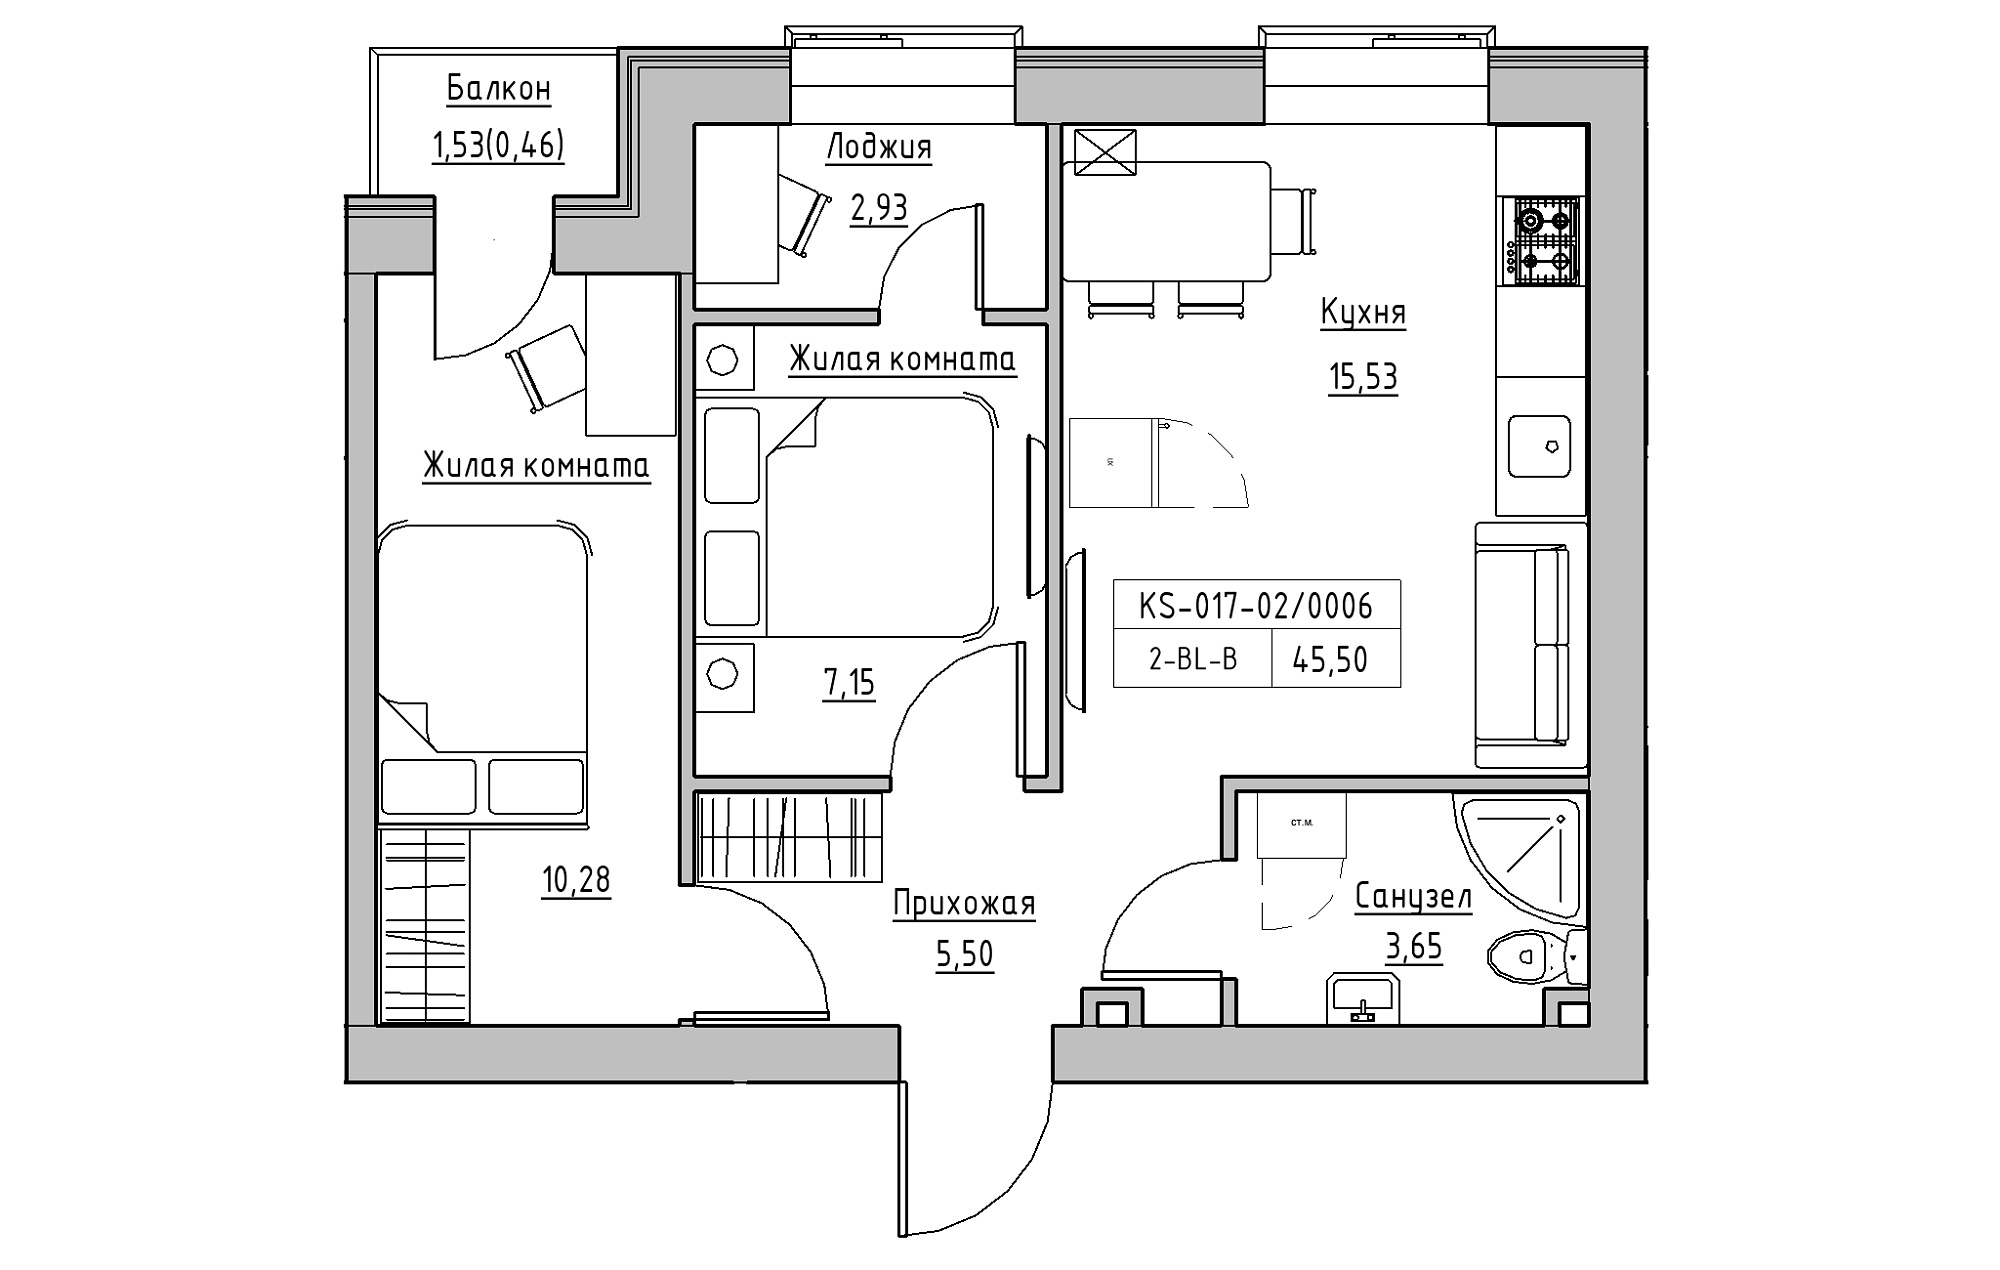 Planning 2-rm flats area 45.5m2, KS-017-02/0006.